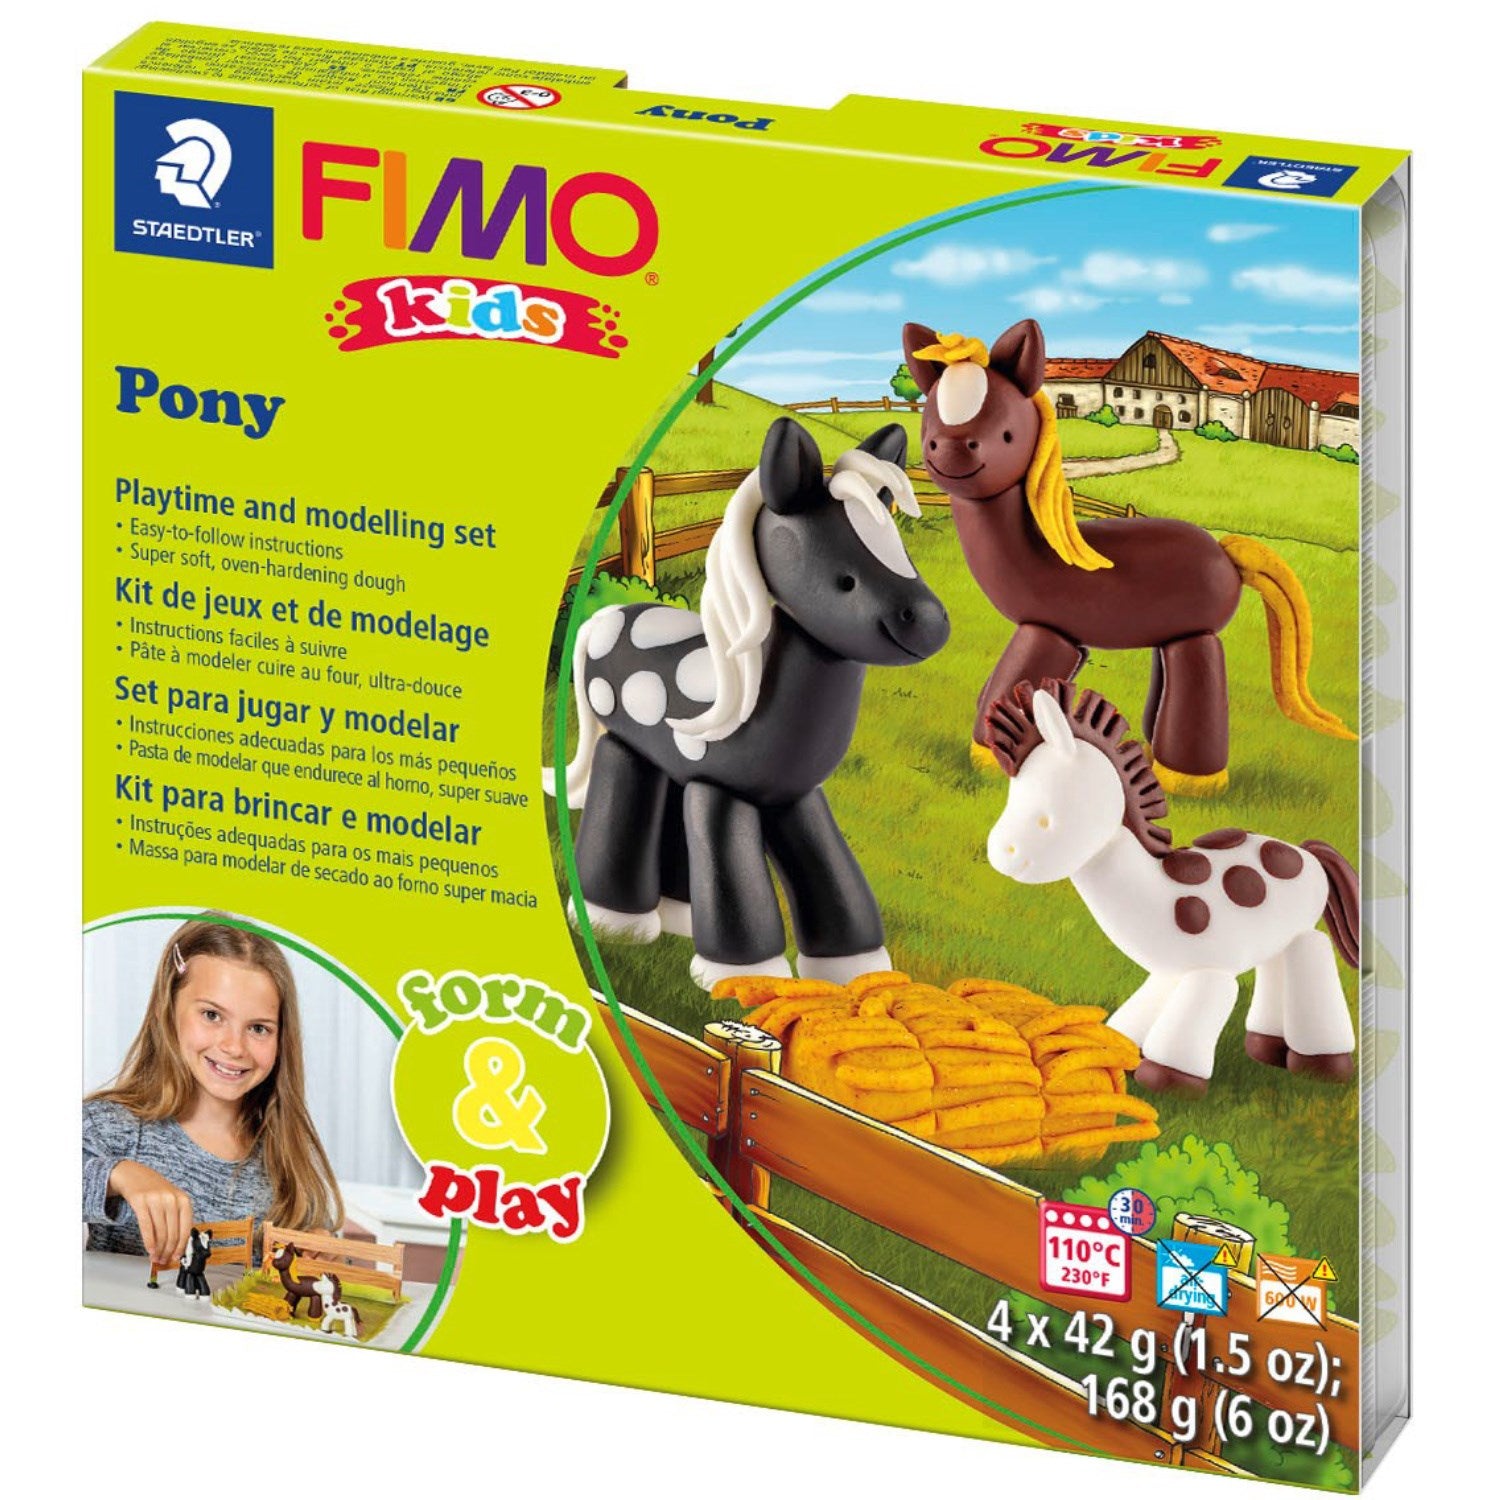 Staedtler Modellera Fimo Kids Pony